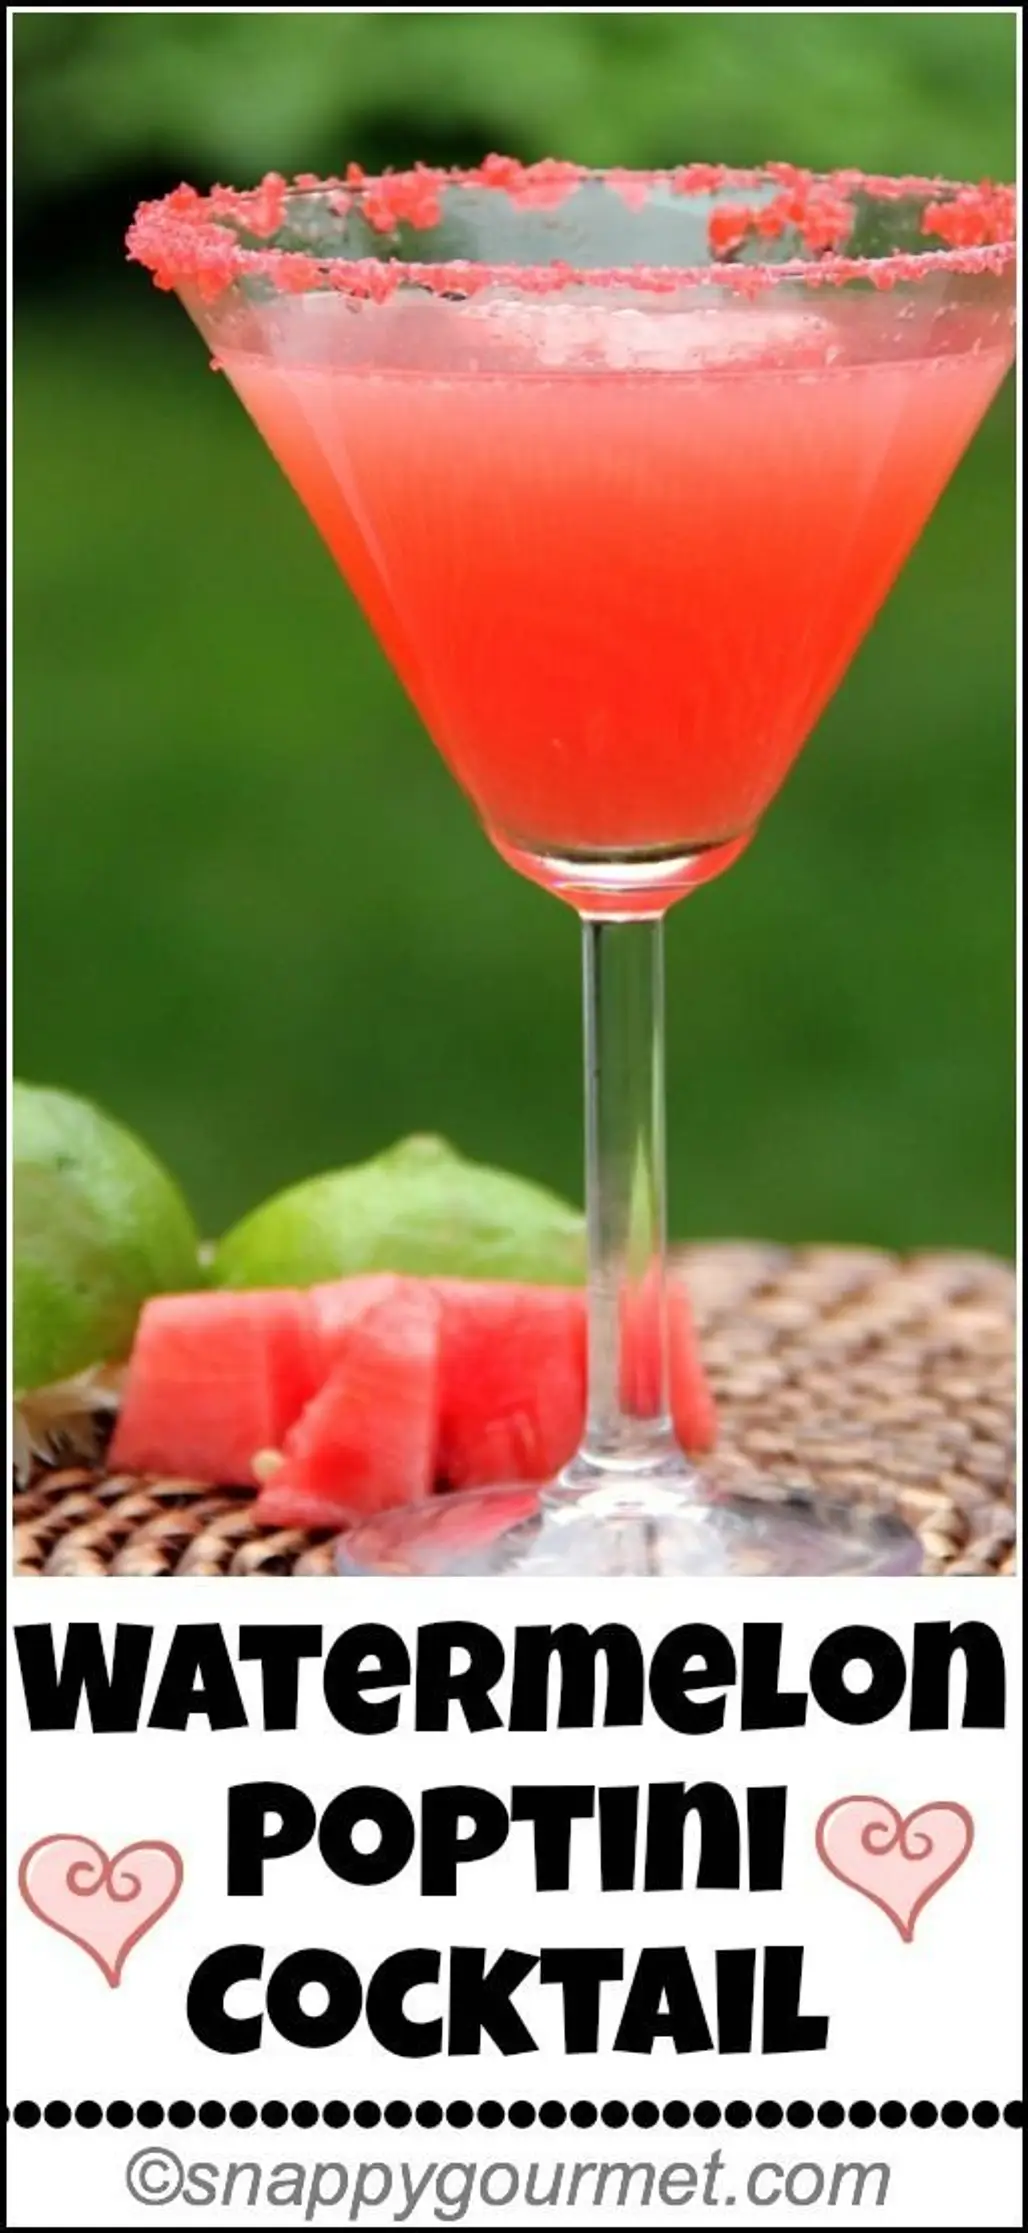 Watermelon Poptini Cocktail